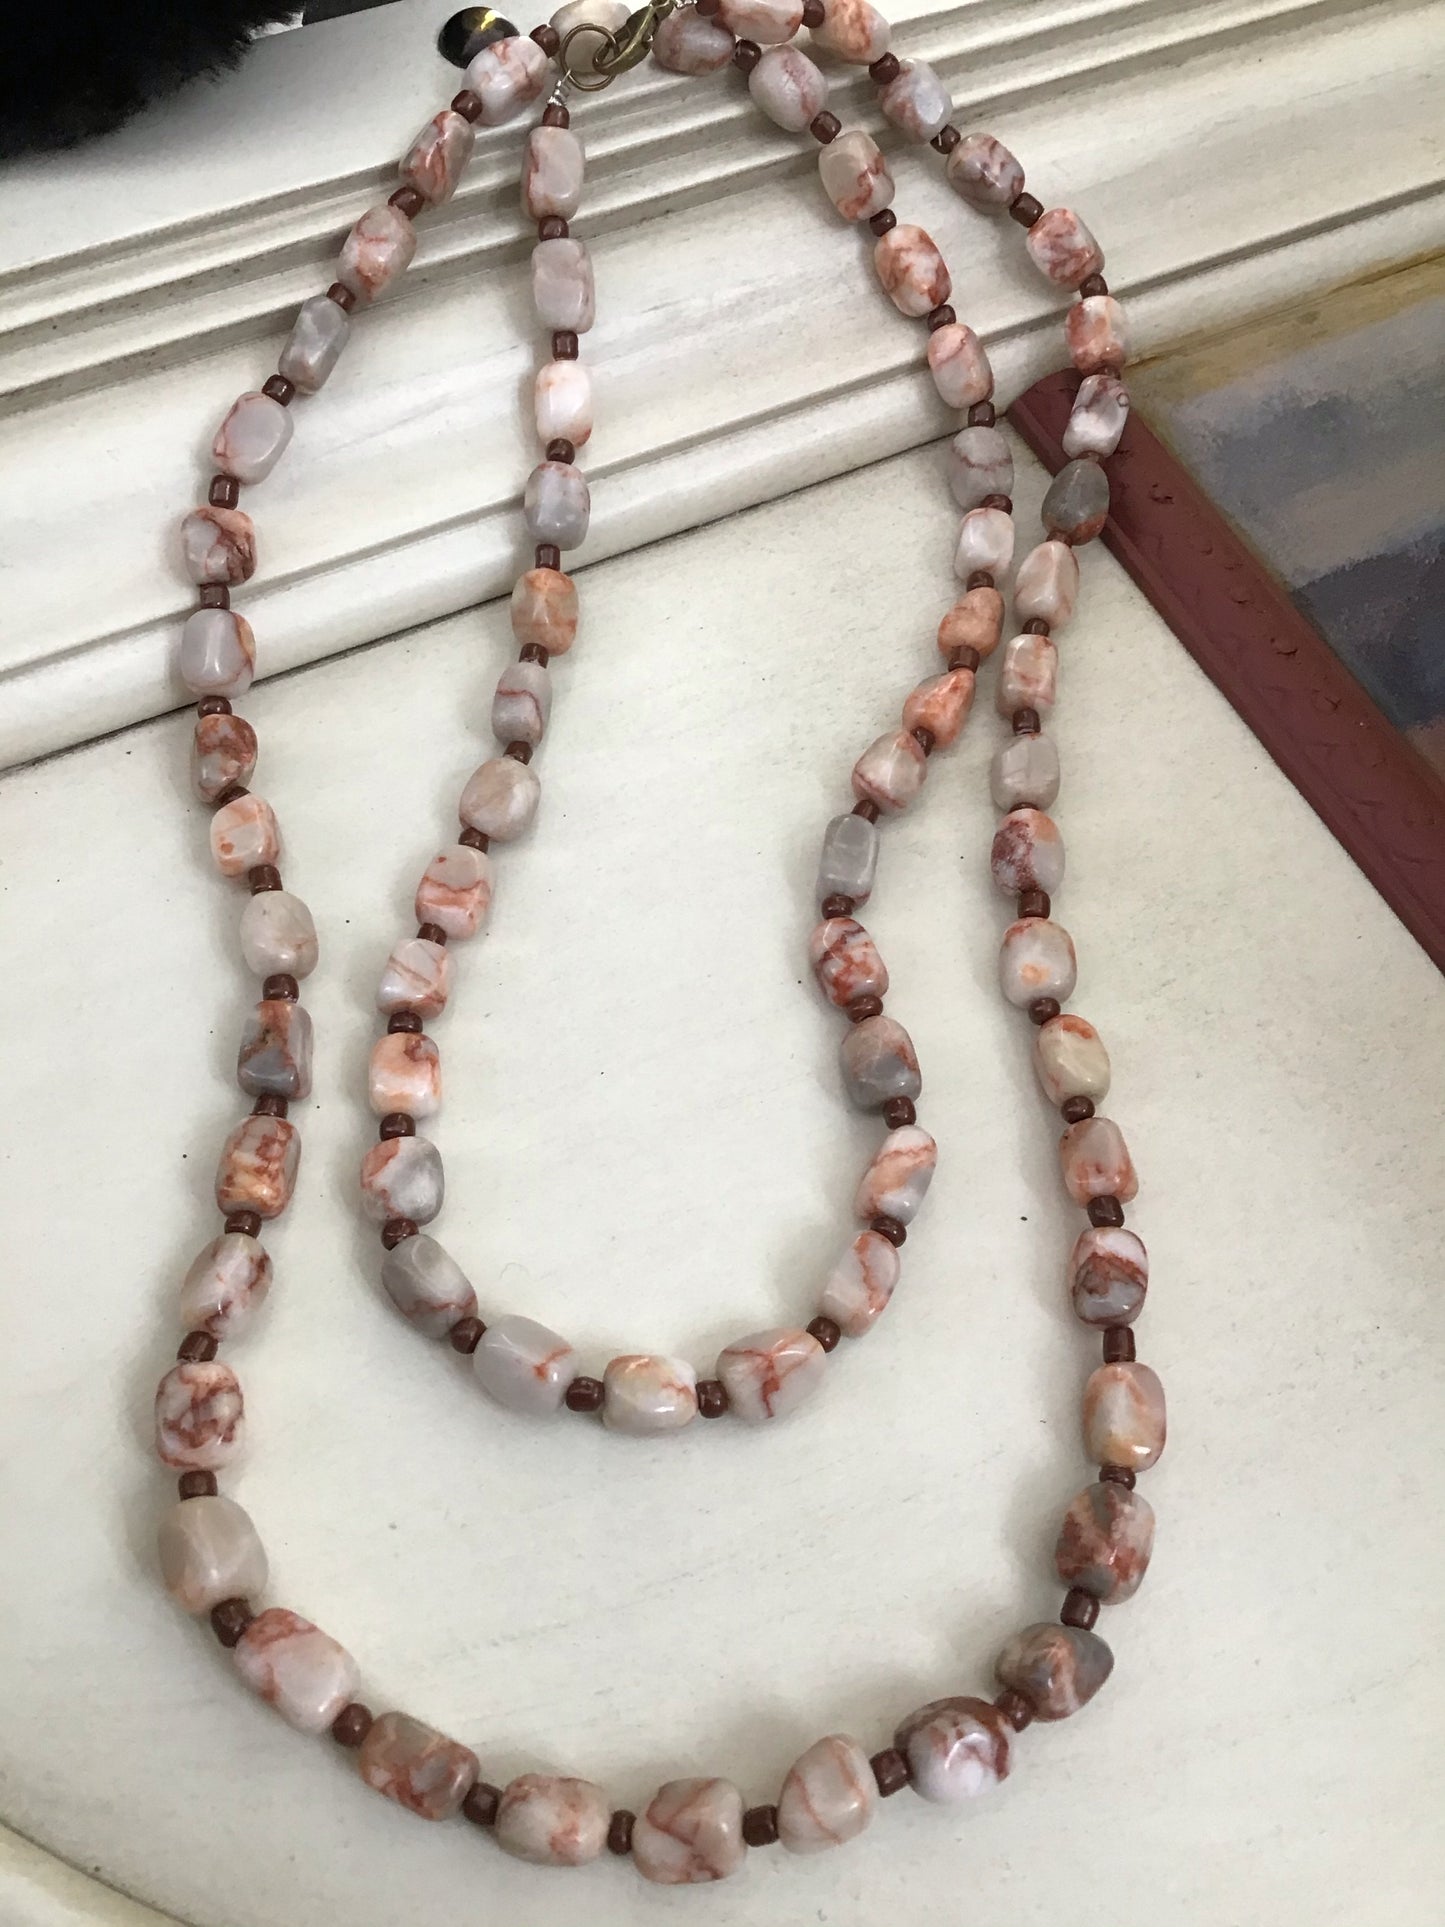 Necklace tan / peach stone